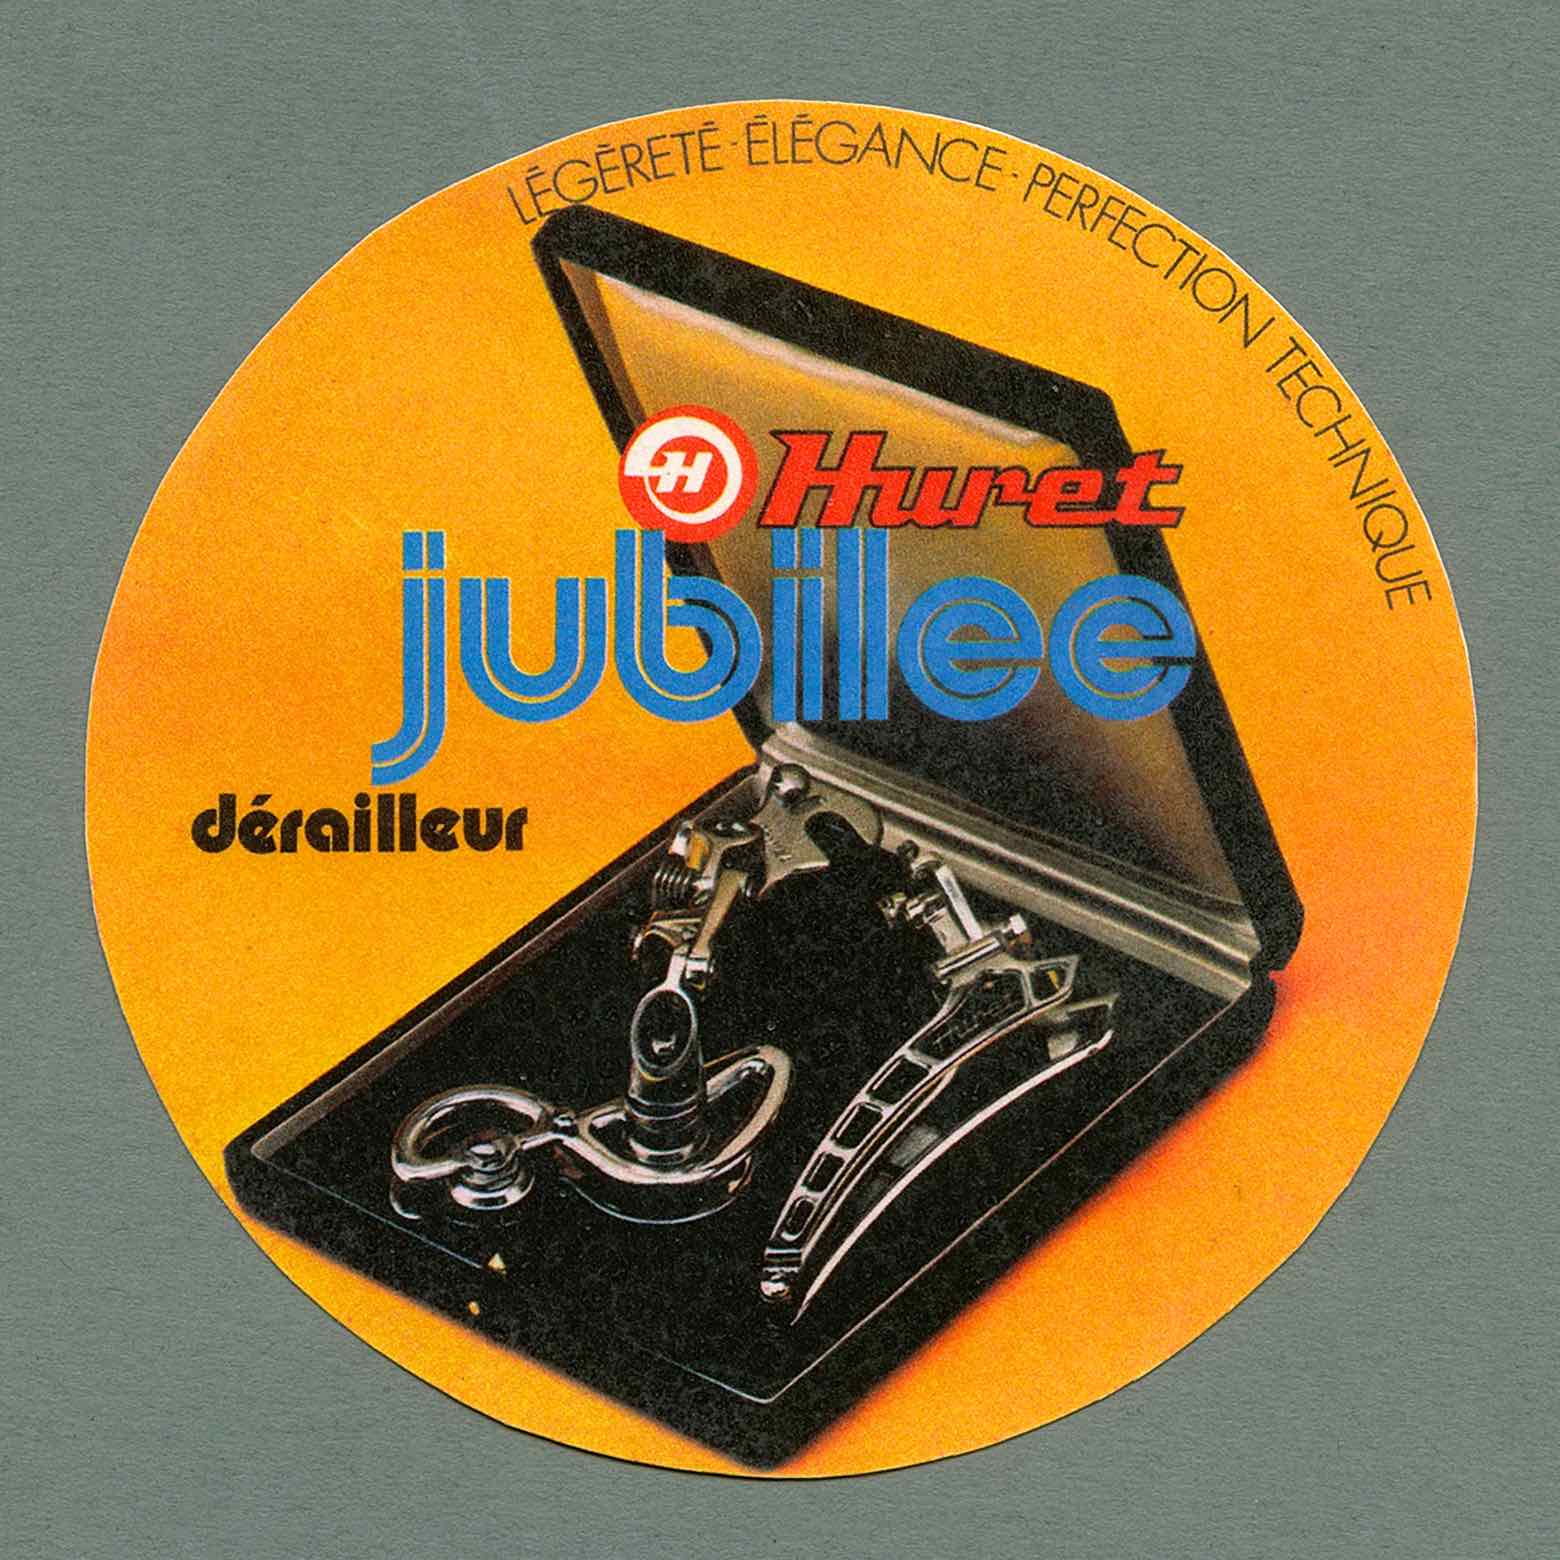 Huret Jubilee Dérailleur - sticker main image